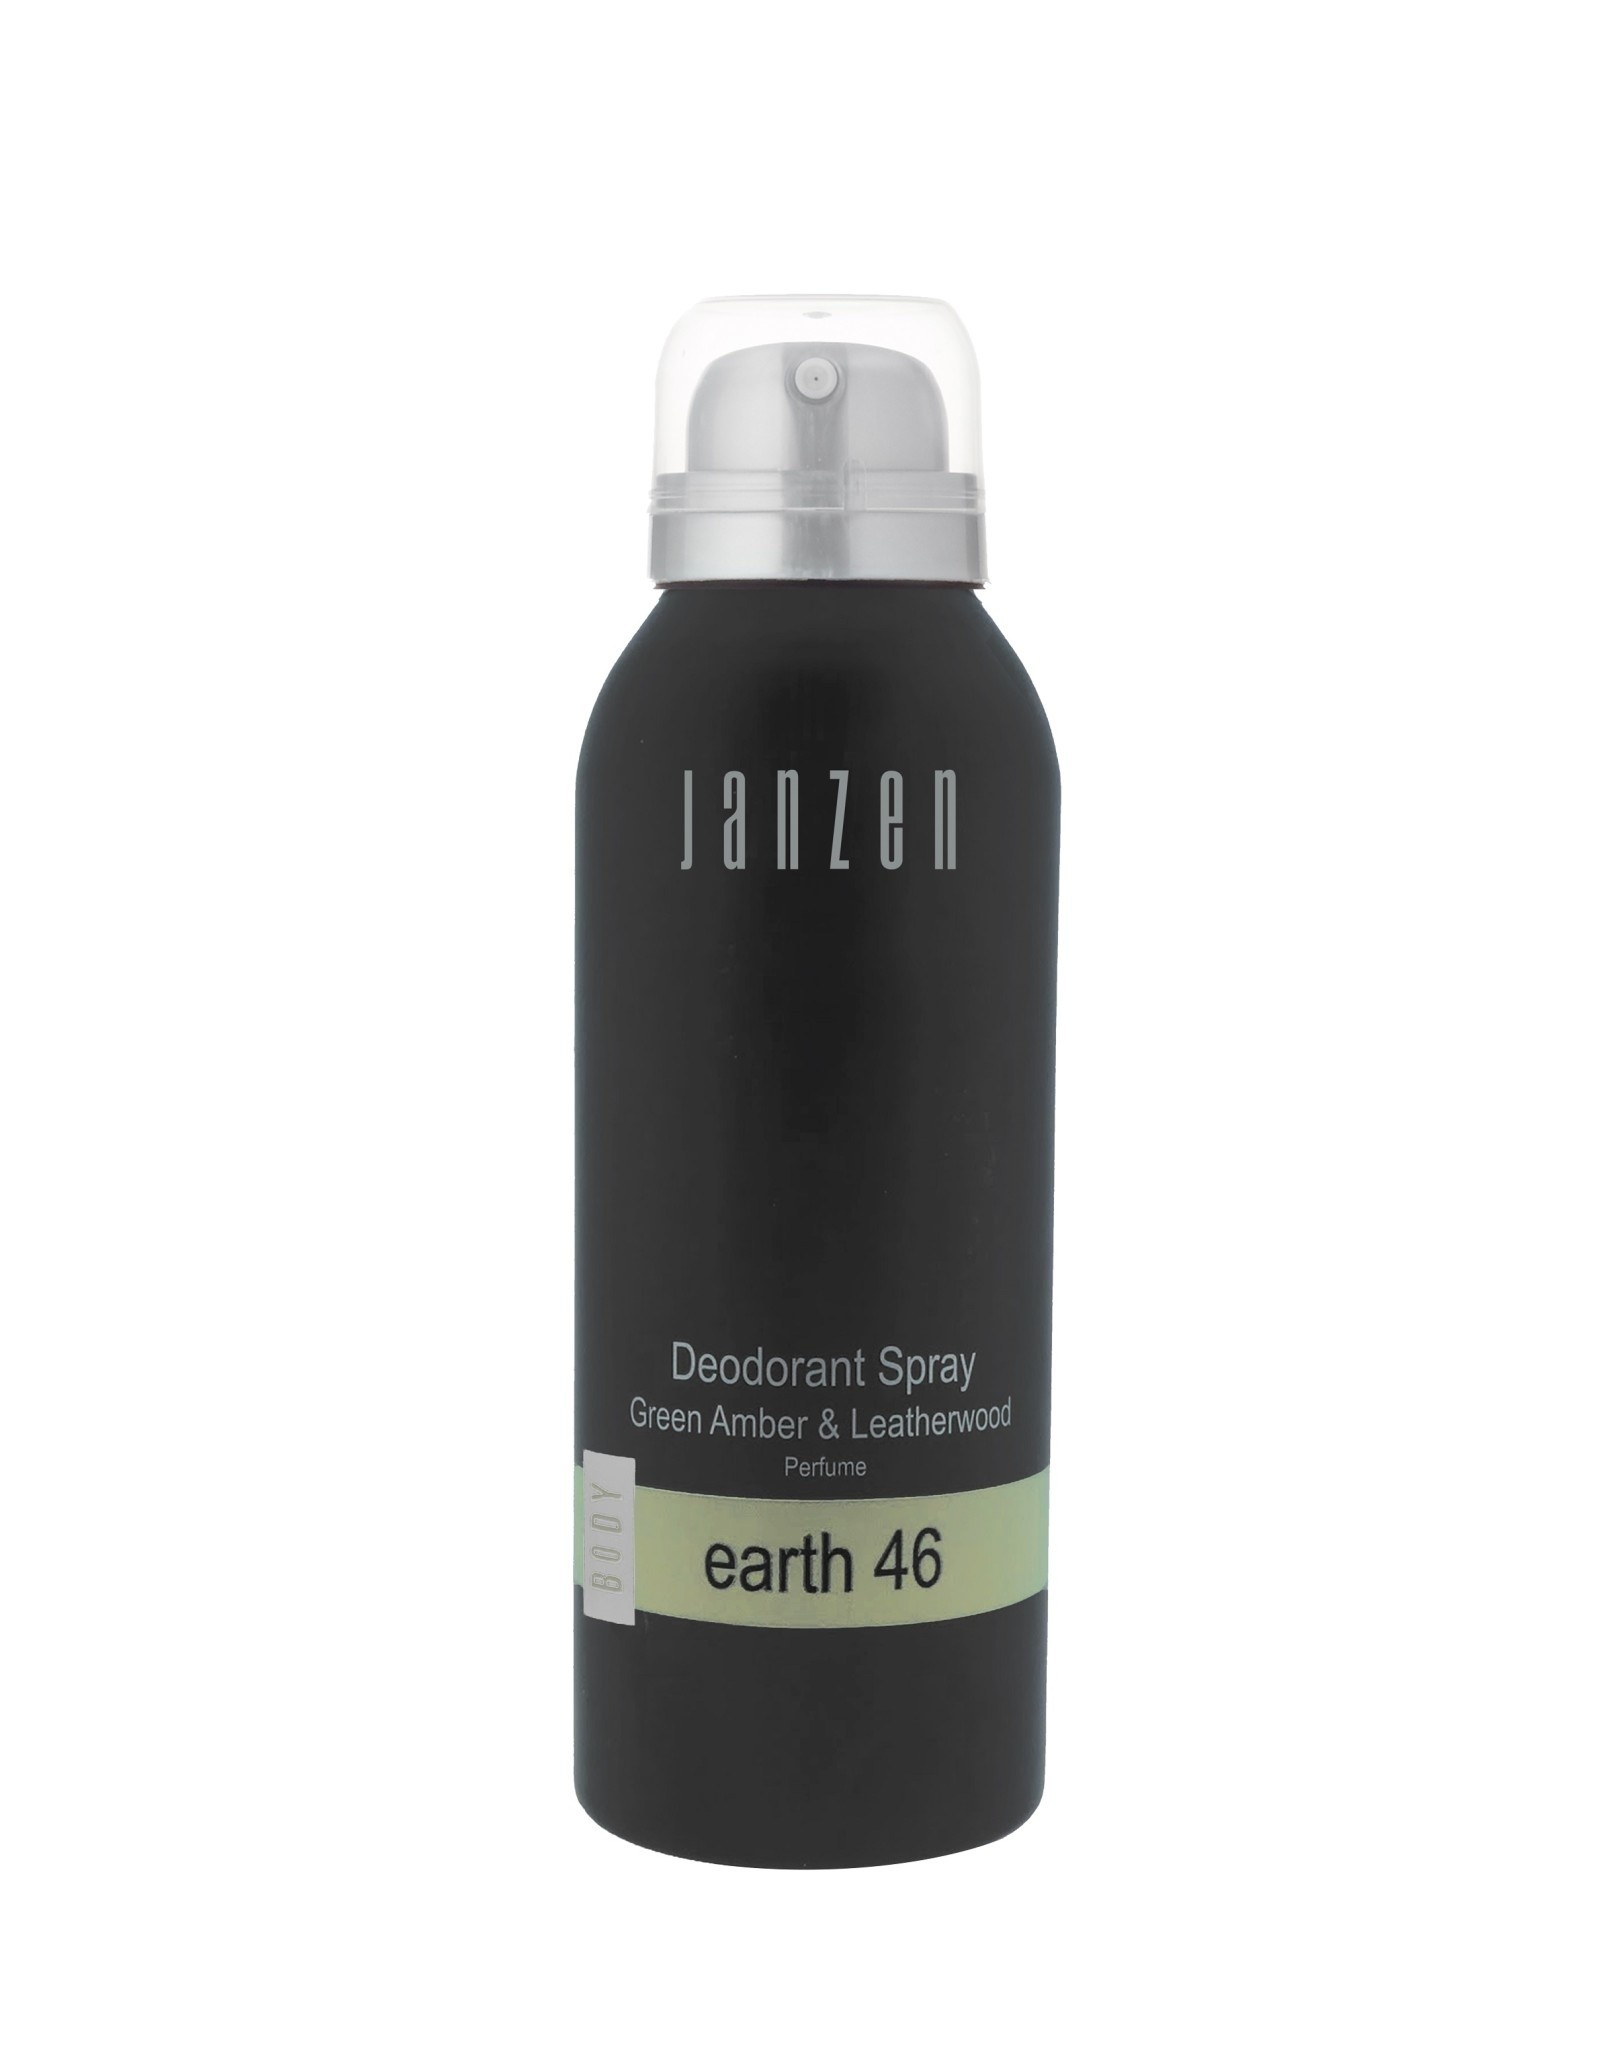 JANZEN Deodorant Spray 150ml Earth 46 - JANZEN